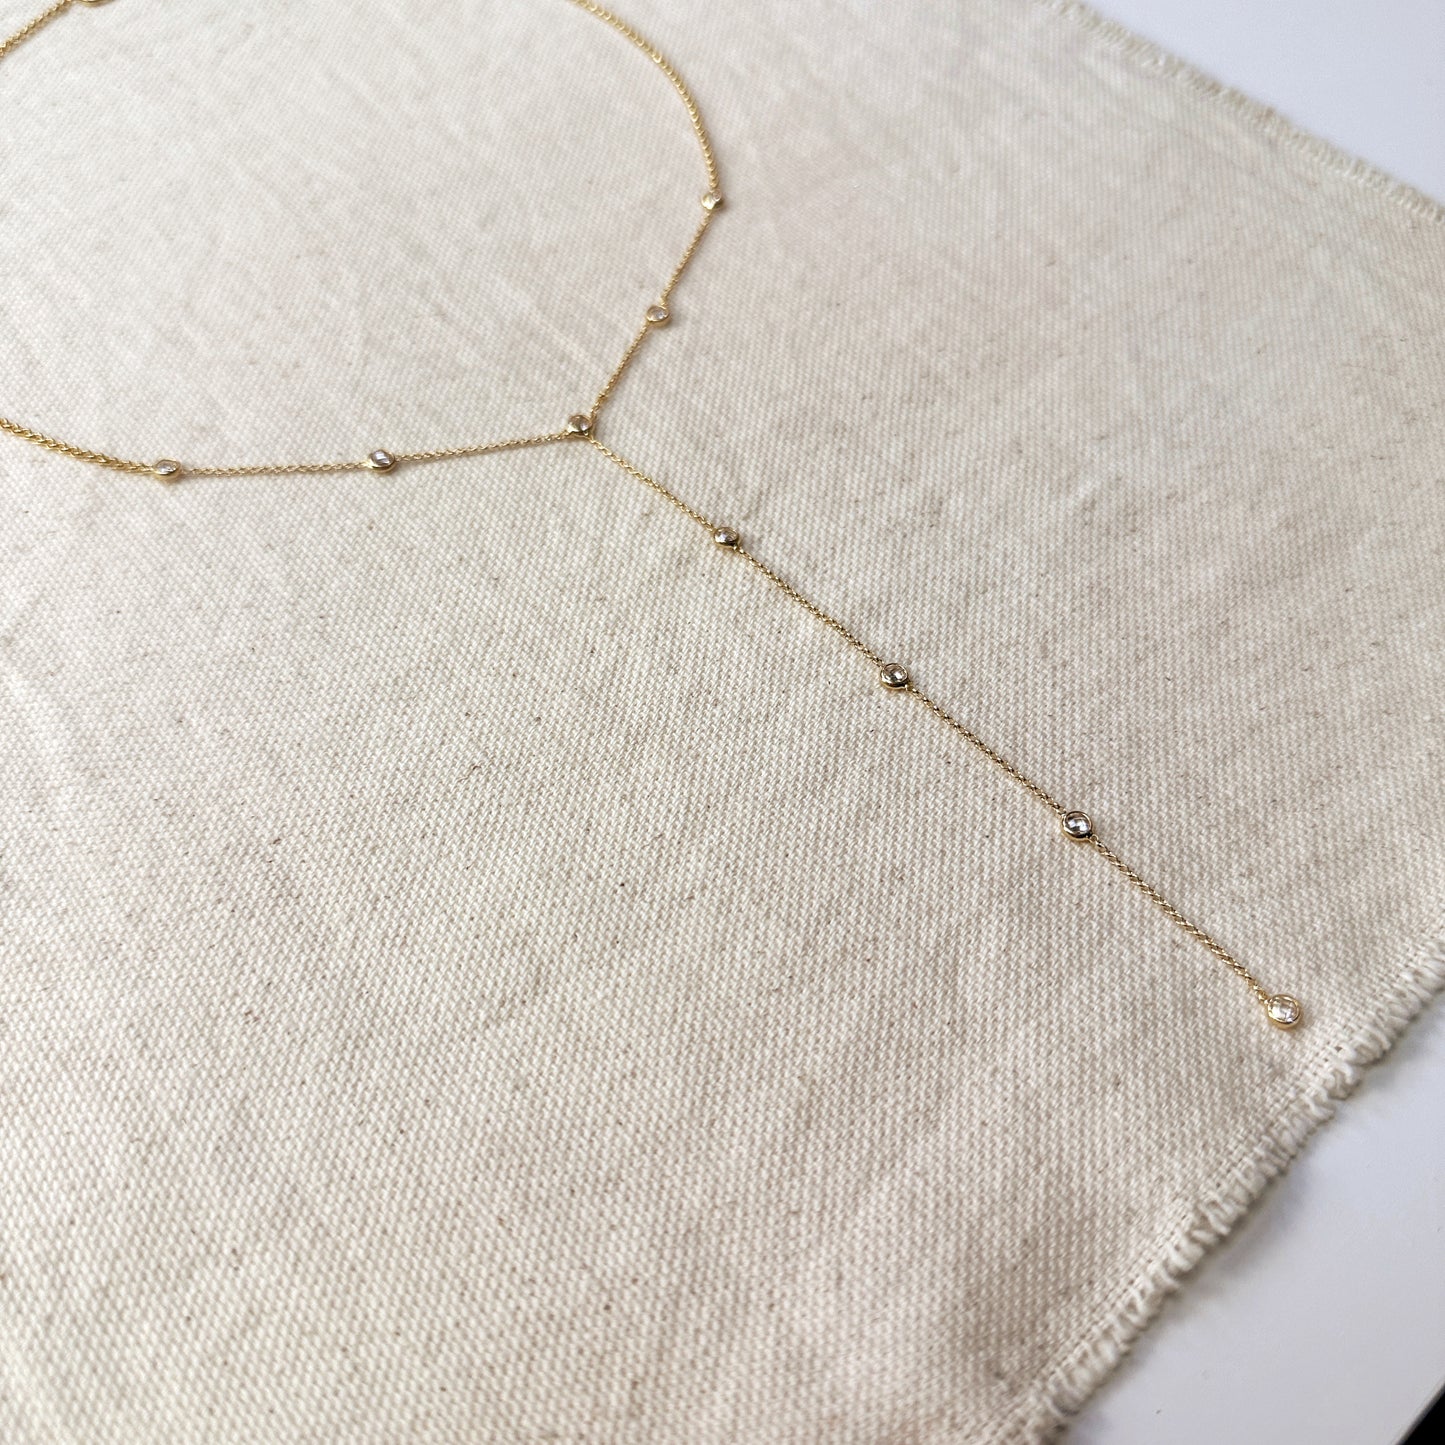 18k Gold Filled Lariat Necklace With Bezel CZ